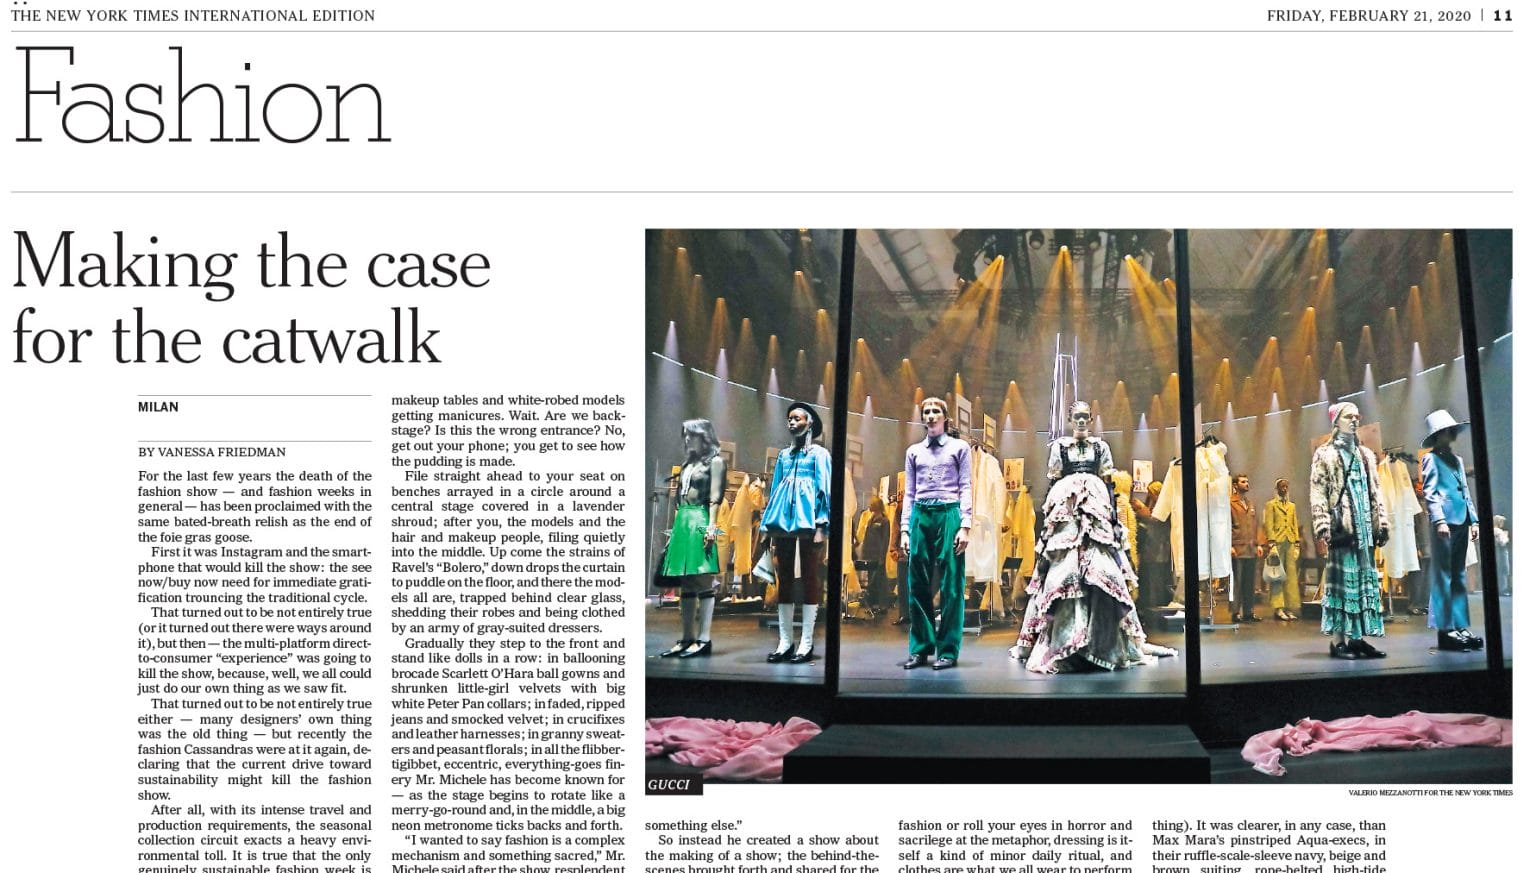 Gucci Fashion Show, Photo by Valerio Mezzanotti for The New York Times